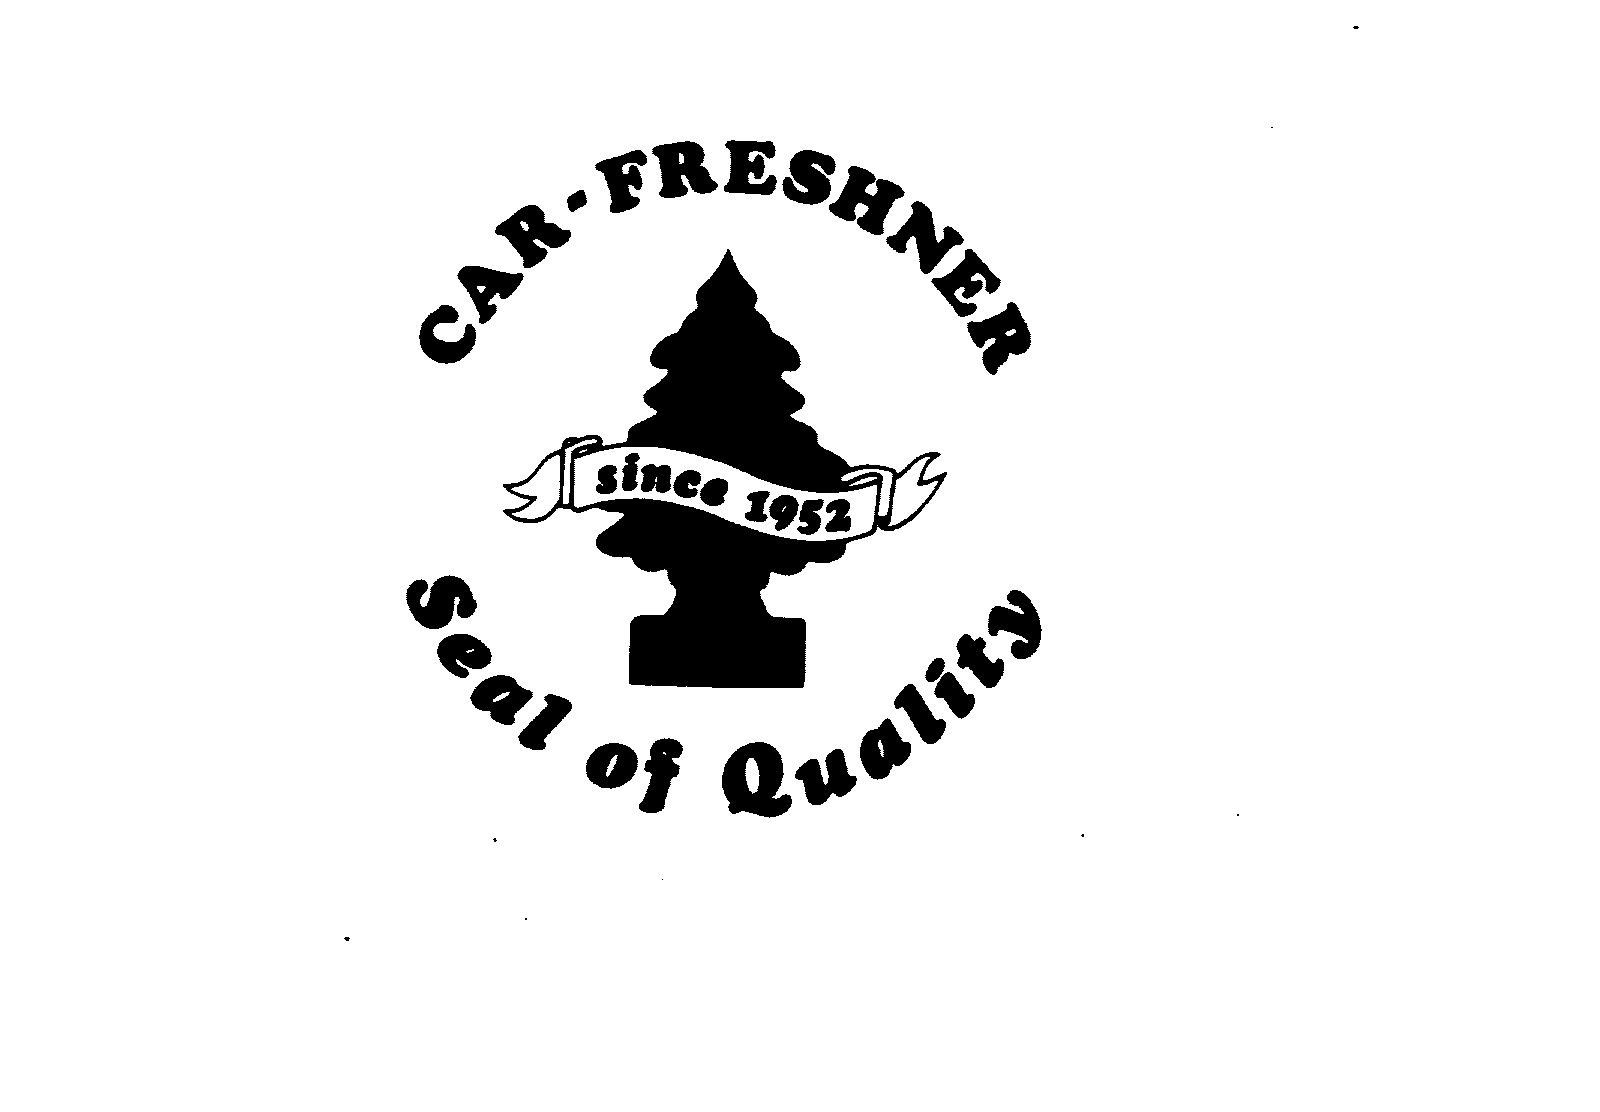  CAR-FRESHNER SEAL OF QUALITY SINCE 1952